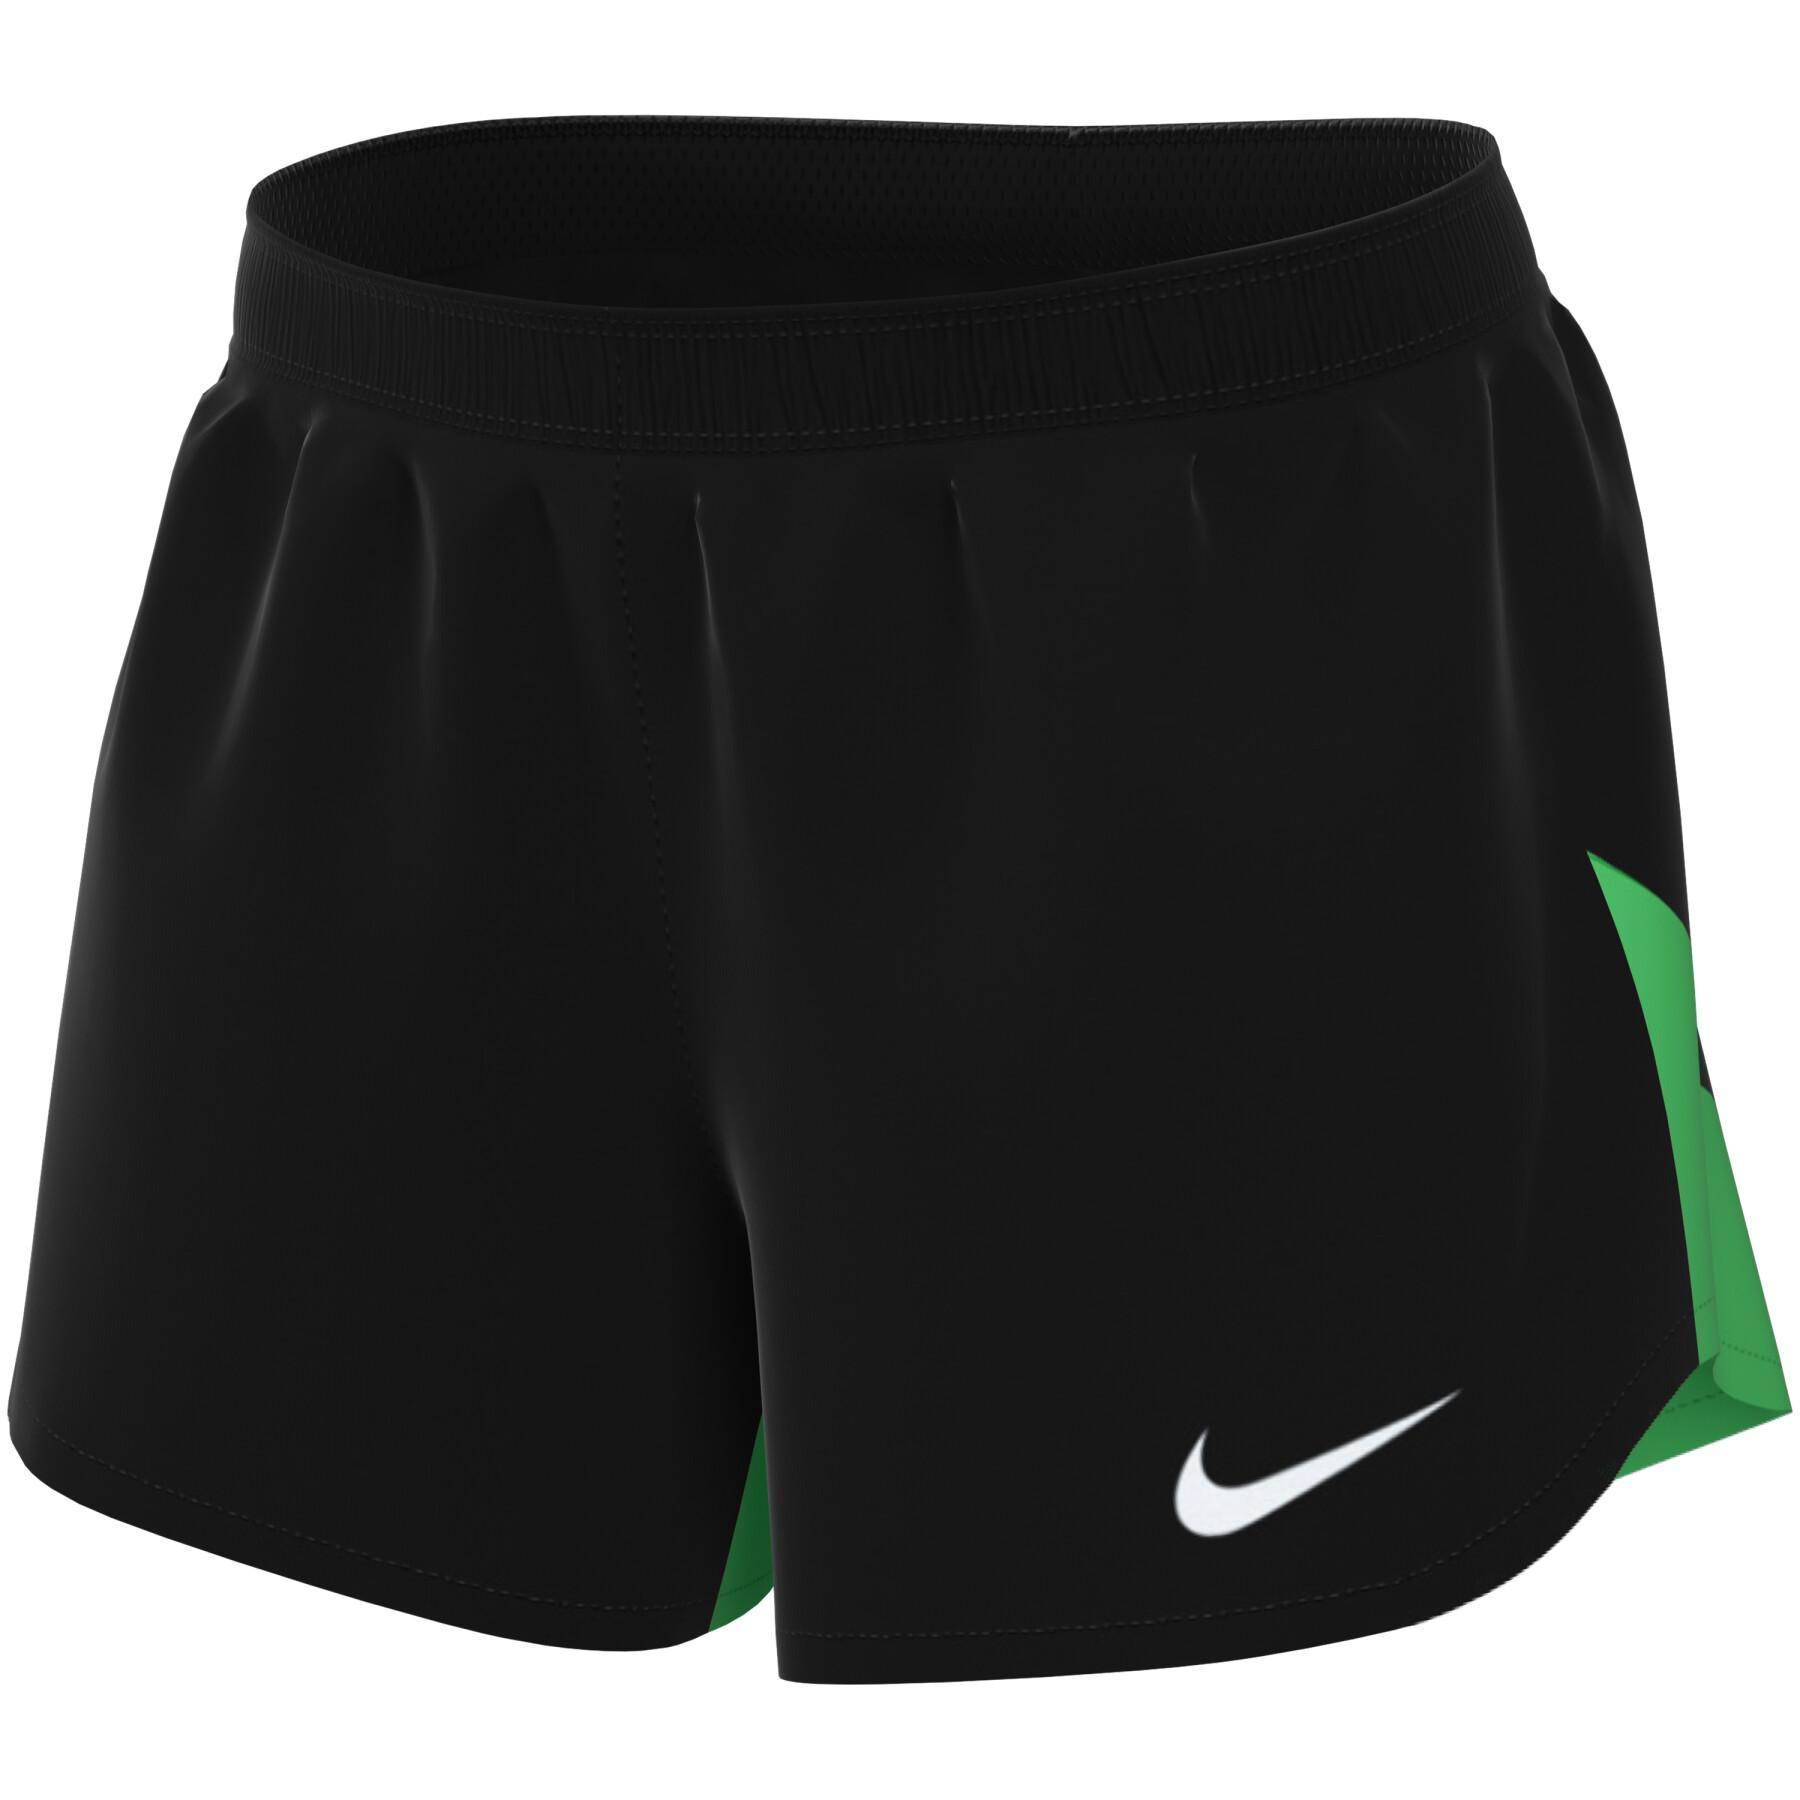 Pantalones cortos de mujer Nike Dri-FIT Pro - Nike - Pantalones cortos de entrenamiento - Ropa de fútbol